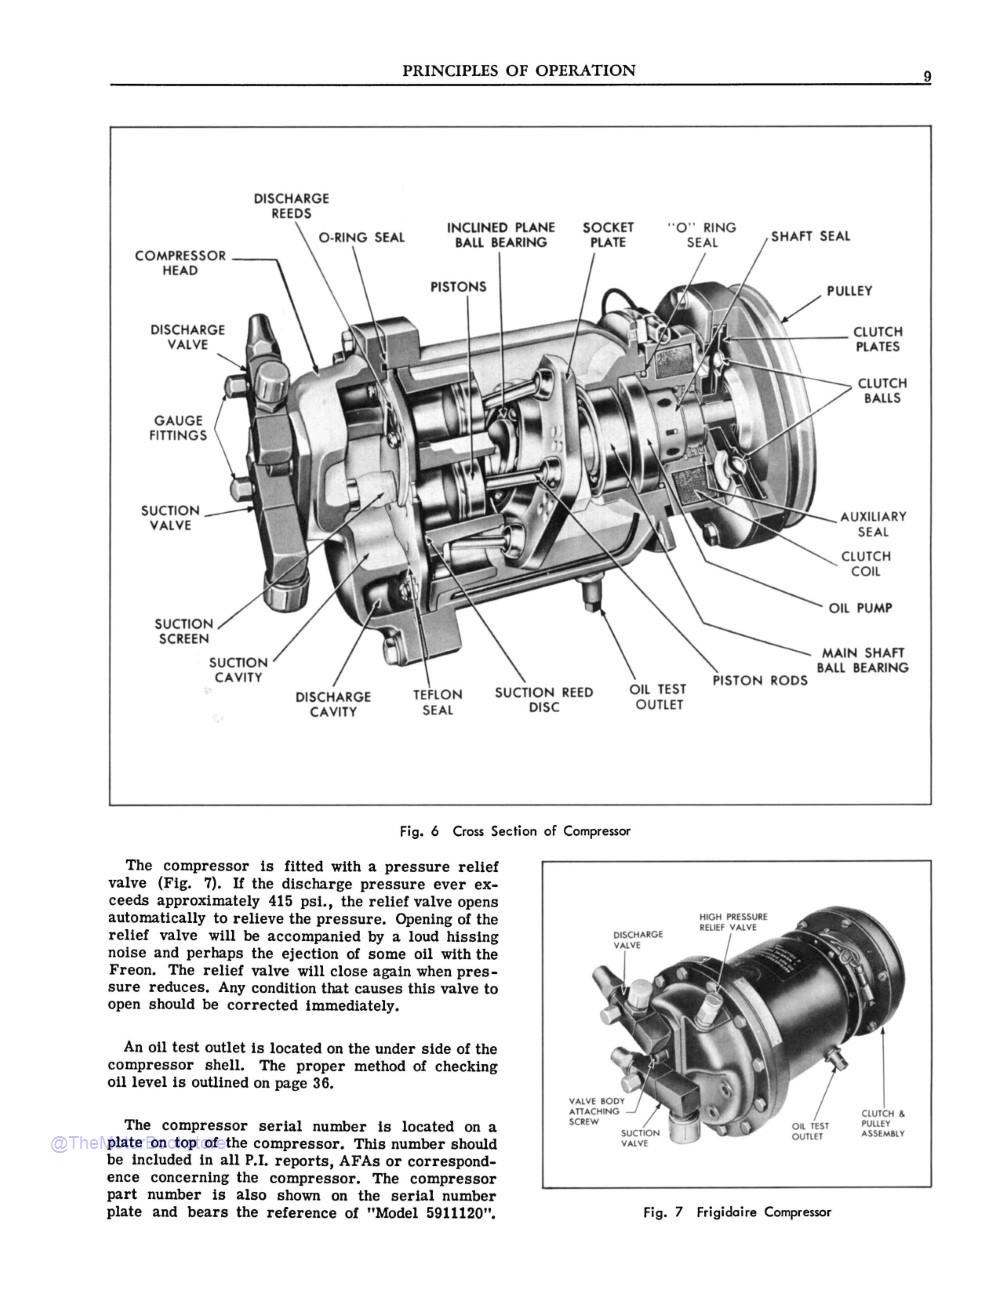 1957 Pontiac Air Conditioning Manual - Sample Page 1